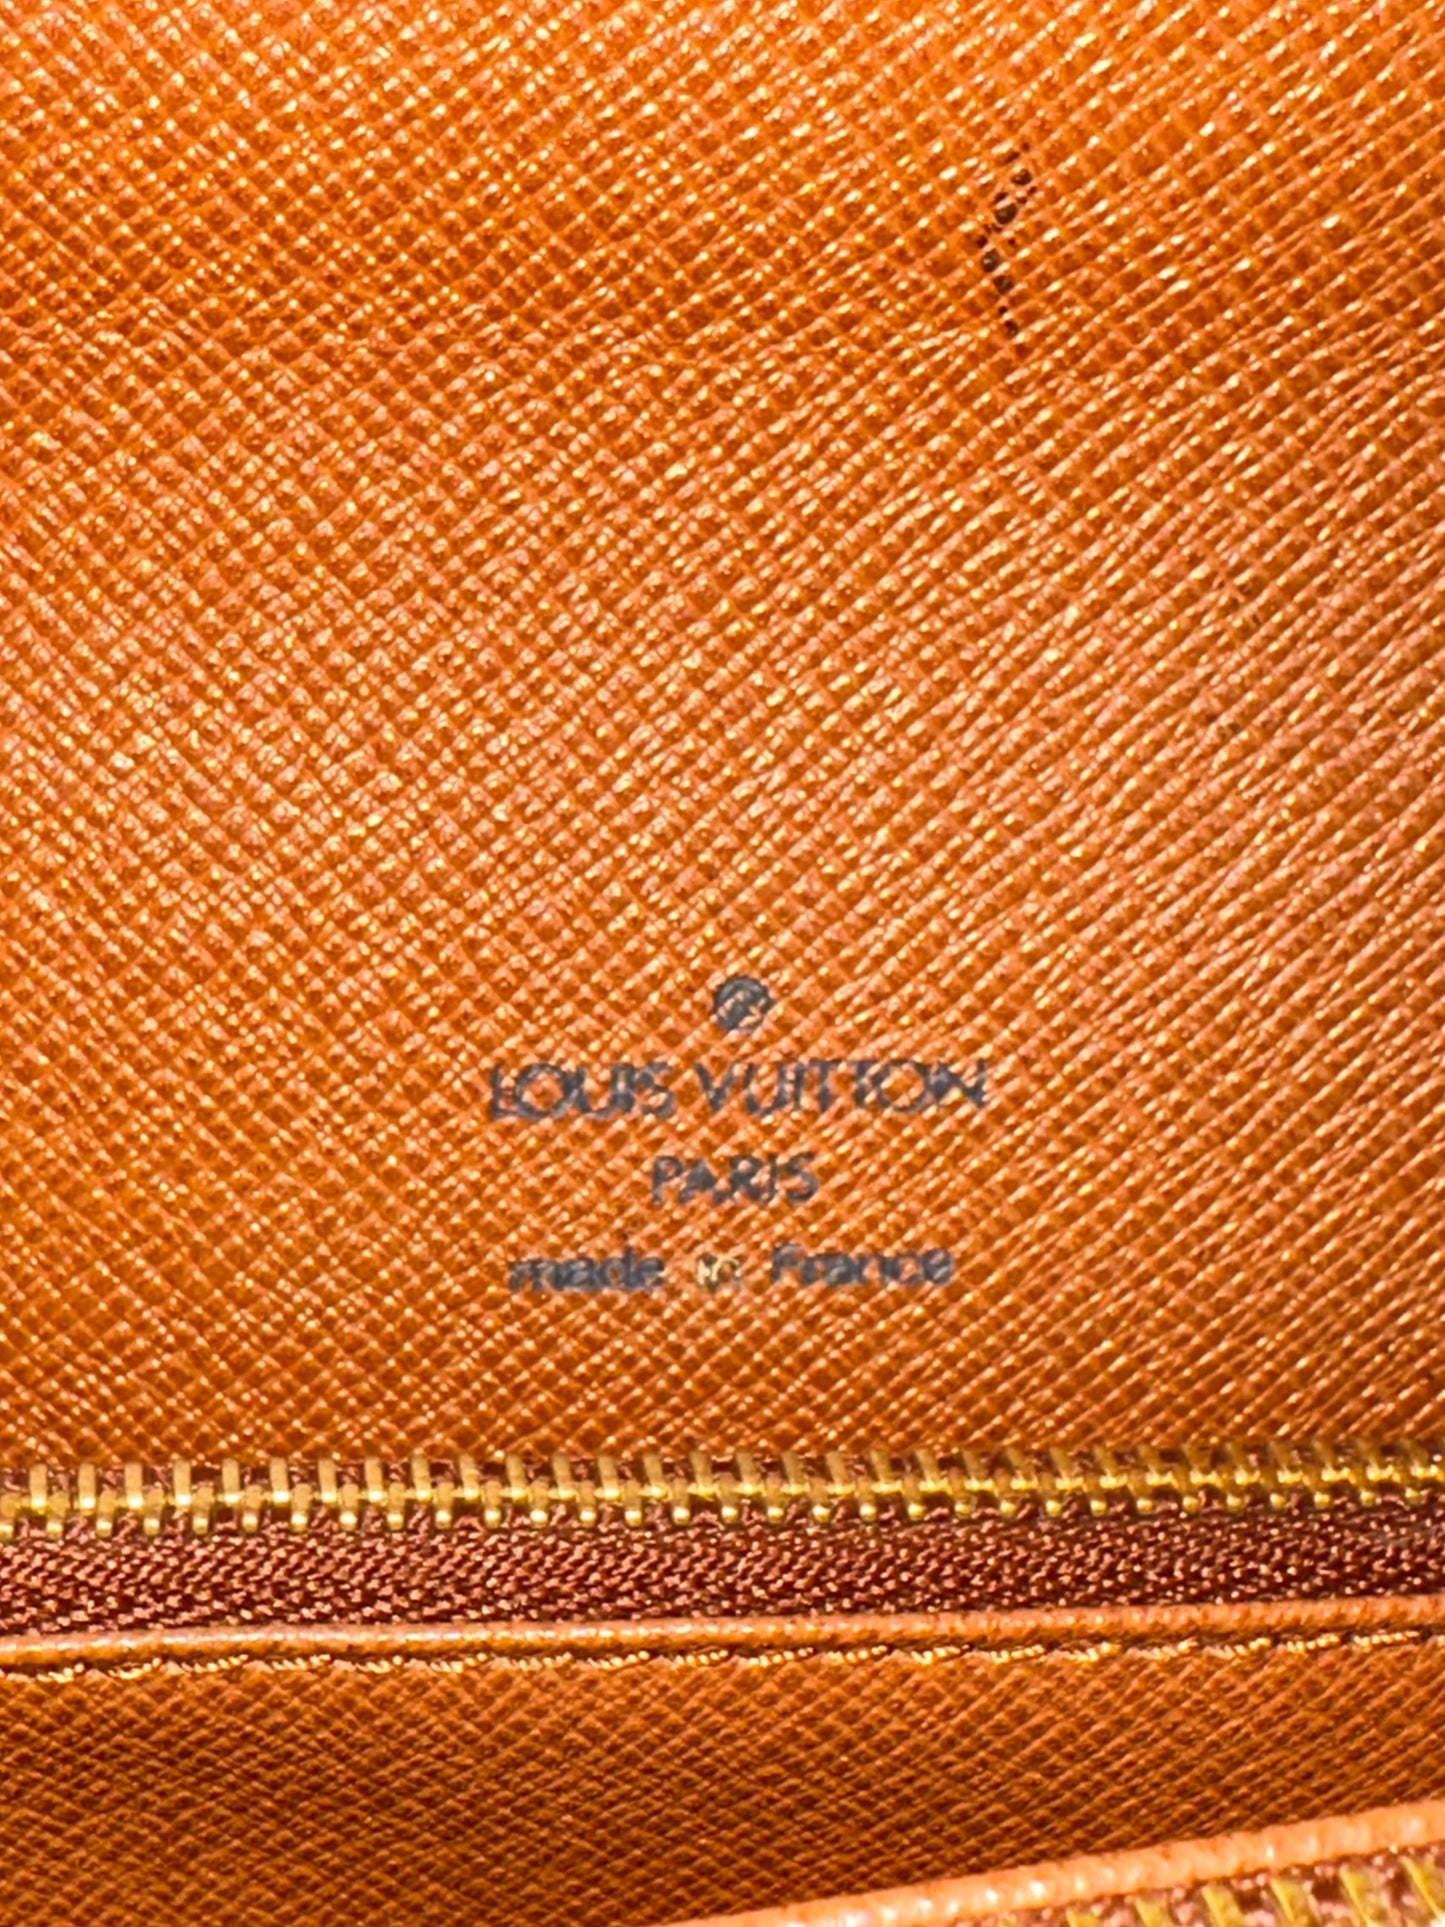 Pre-owned Authentic Louis Vuitton Concorde Monogram Handbag